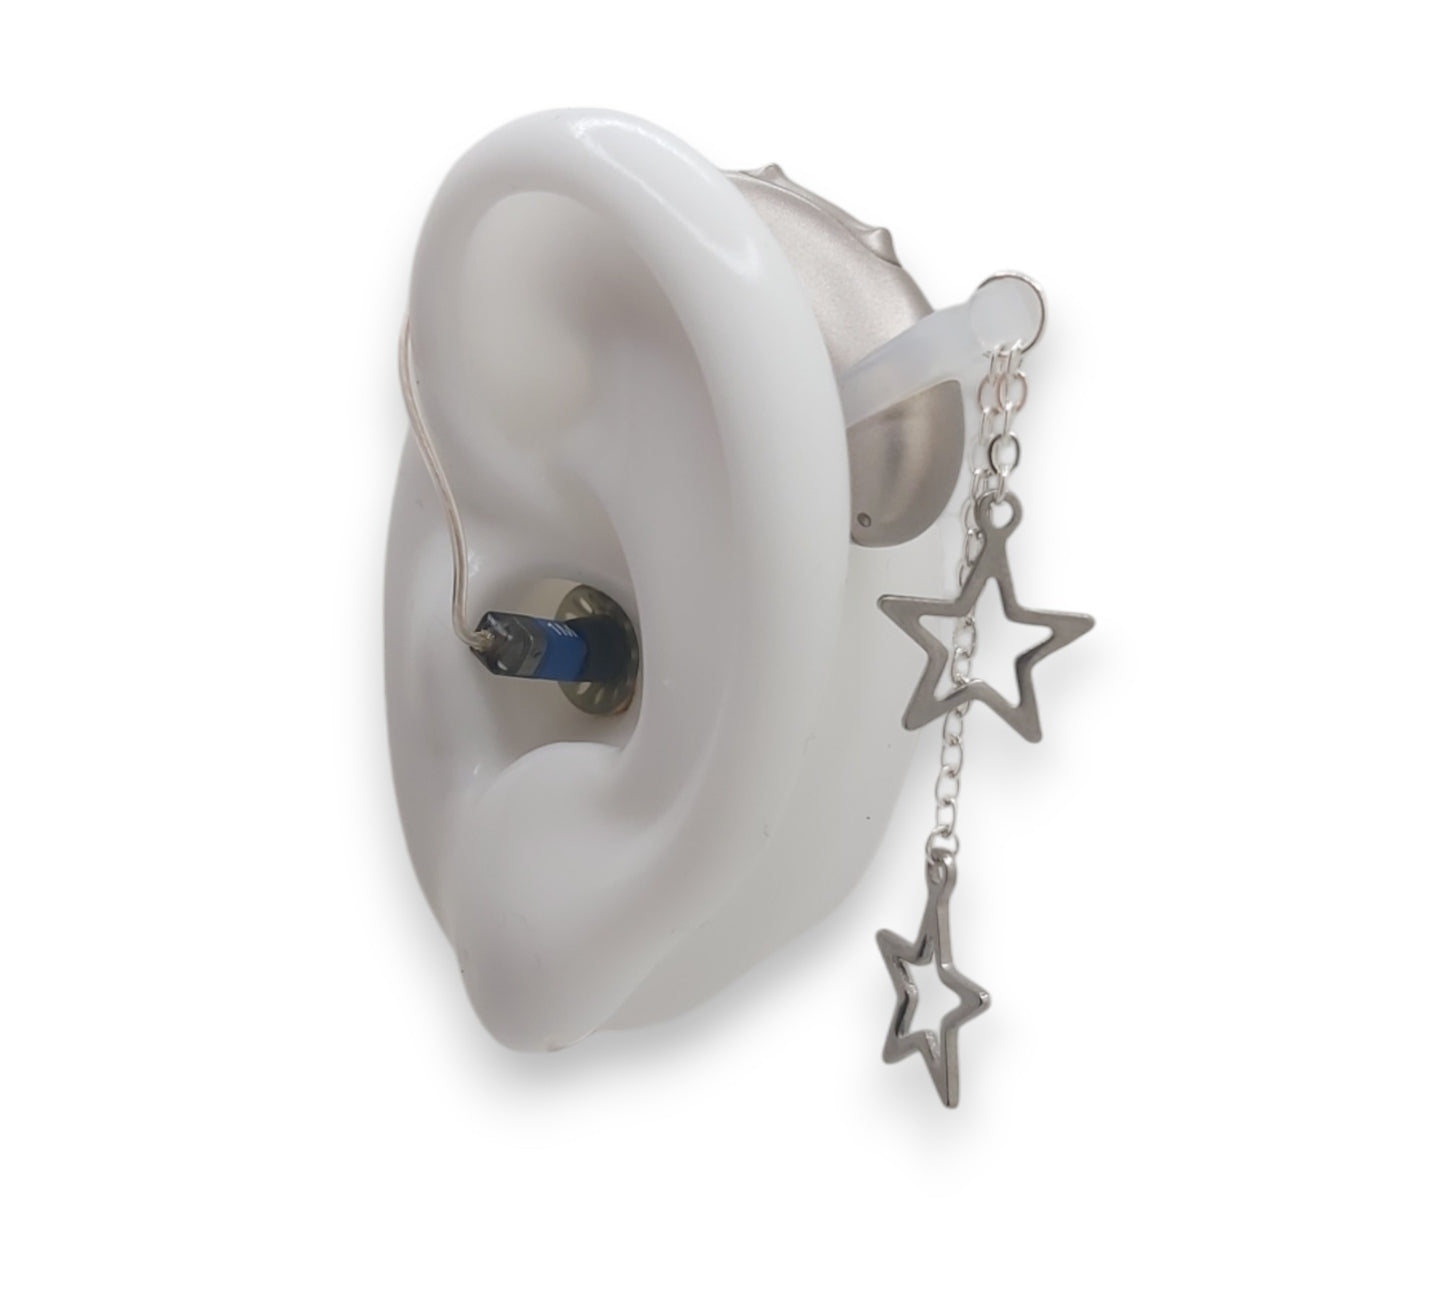 Pendentif pour aide auditive Silver Star